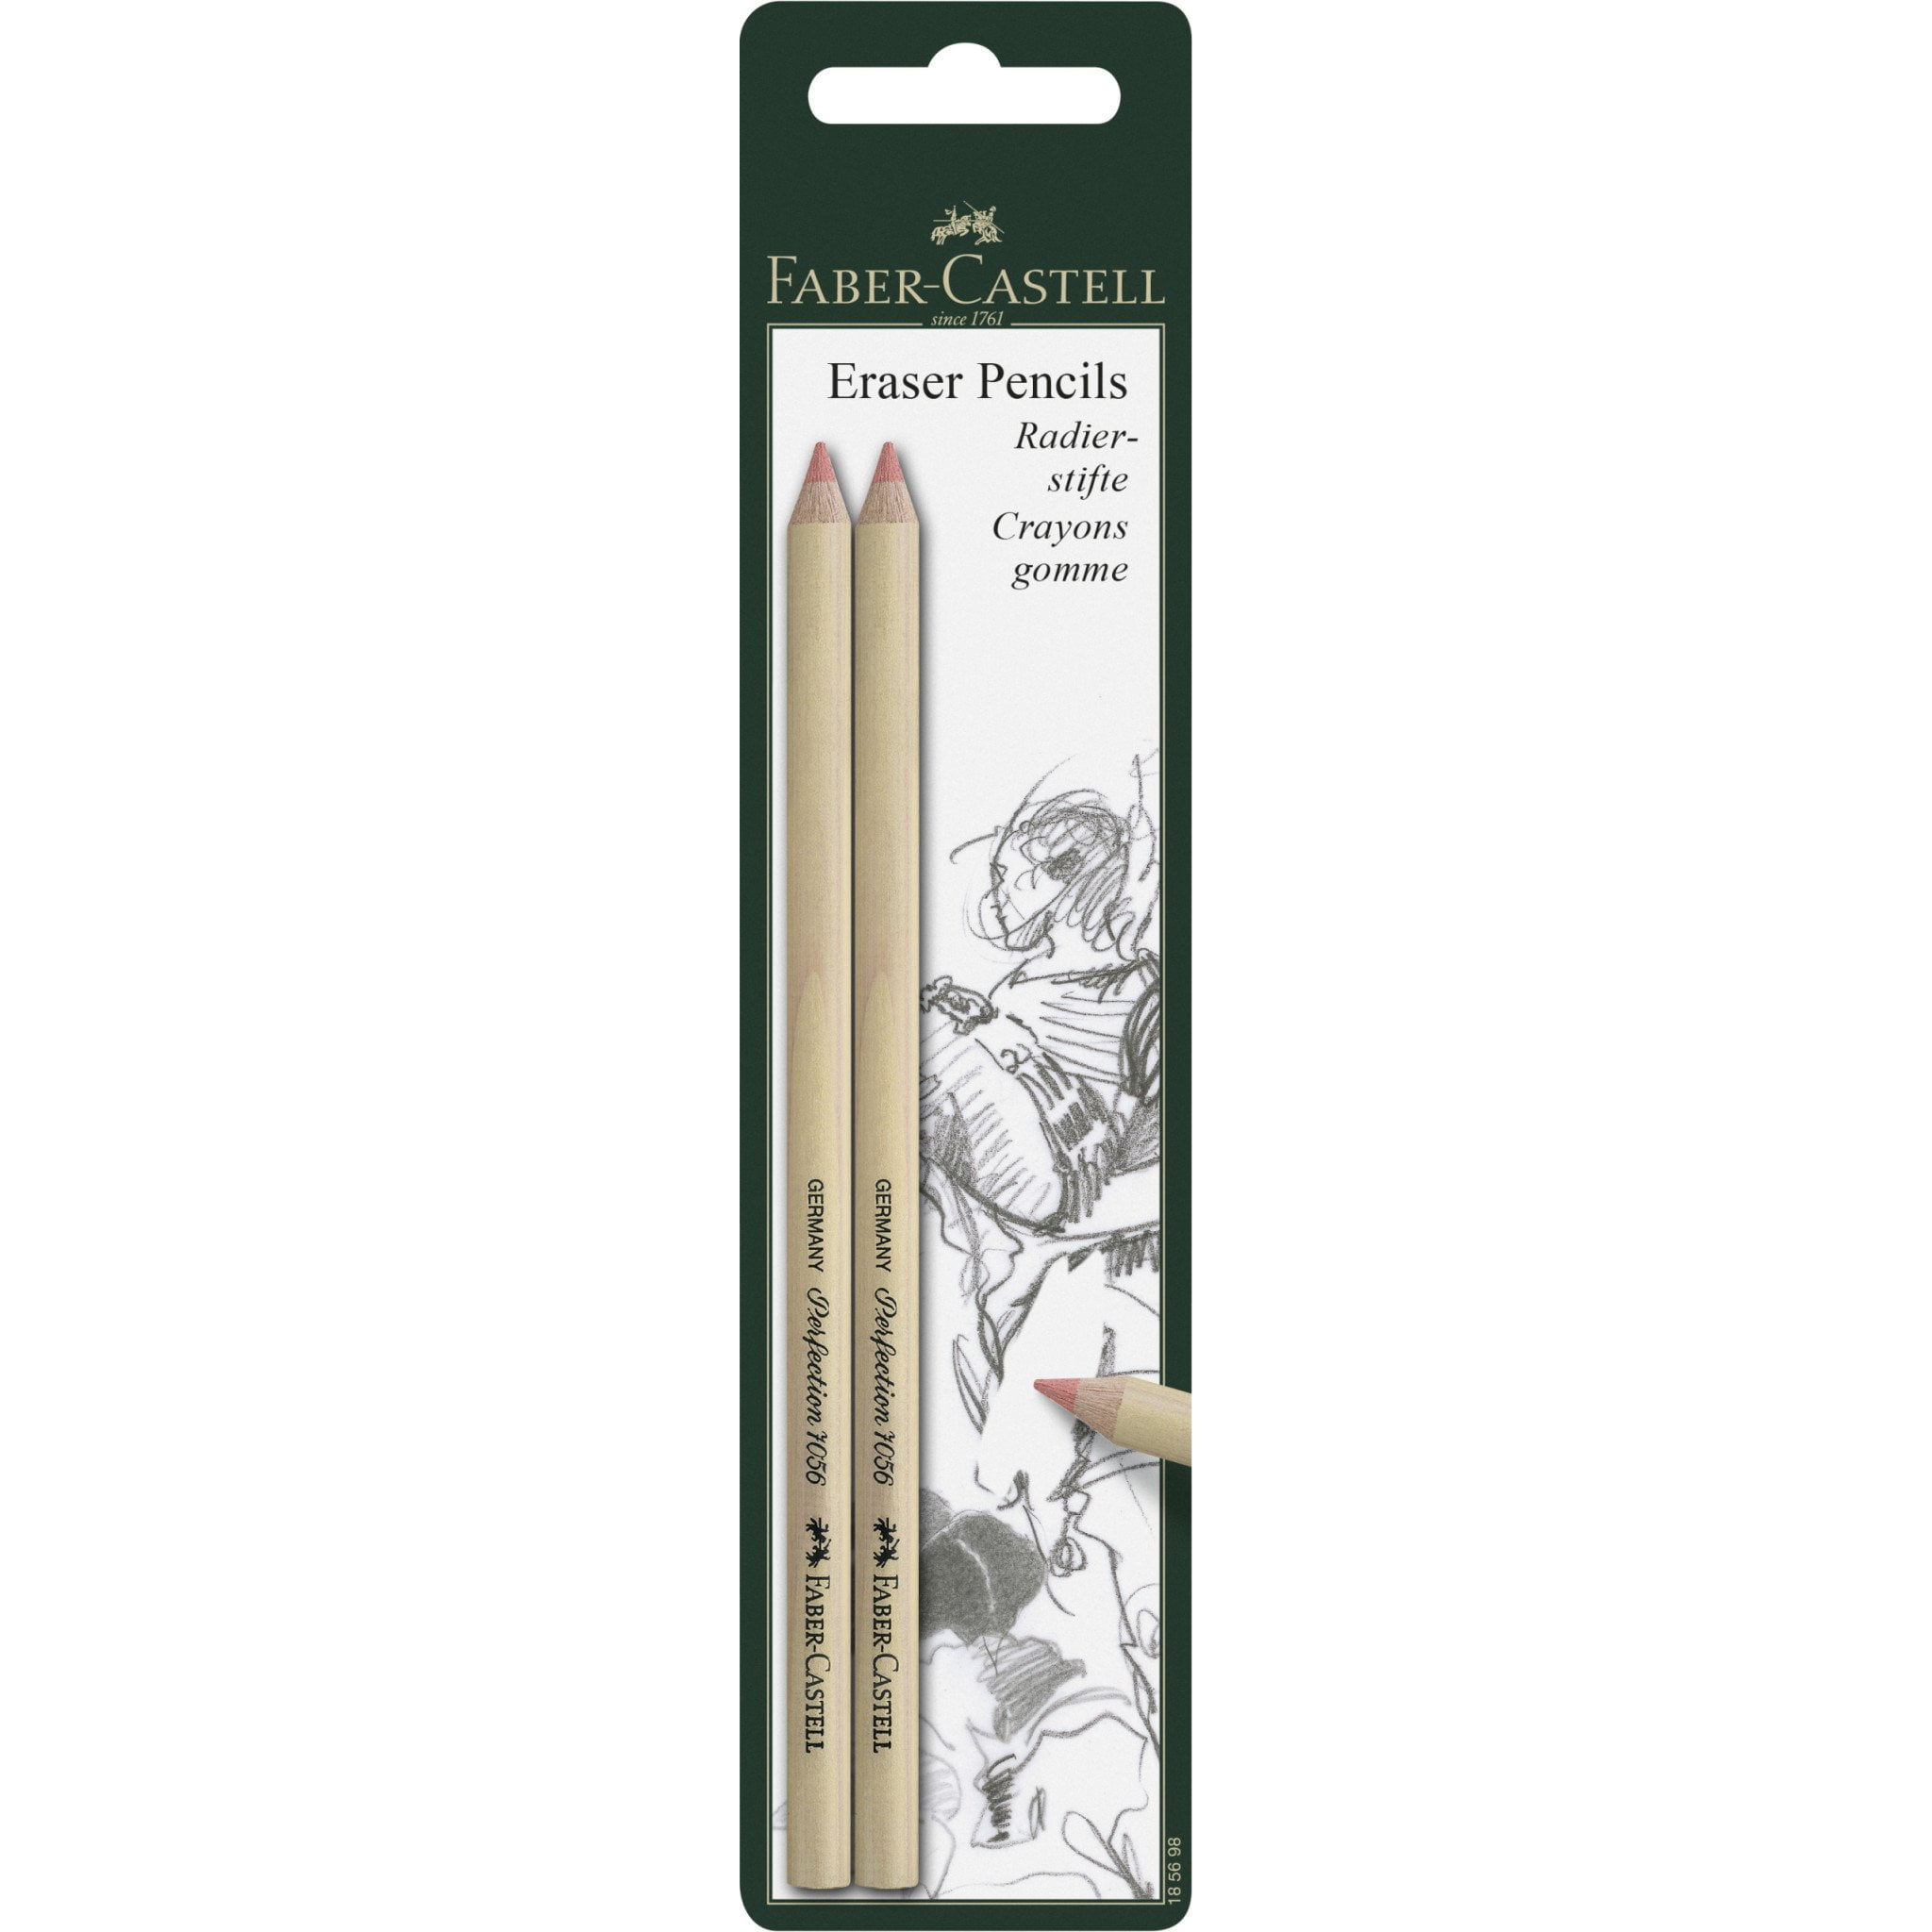  Faber-Castell 127321 Eraser - erasers - Random Color, 1 Unit :  Pencil Erasers : Office Products